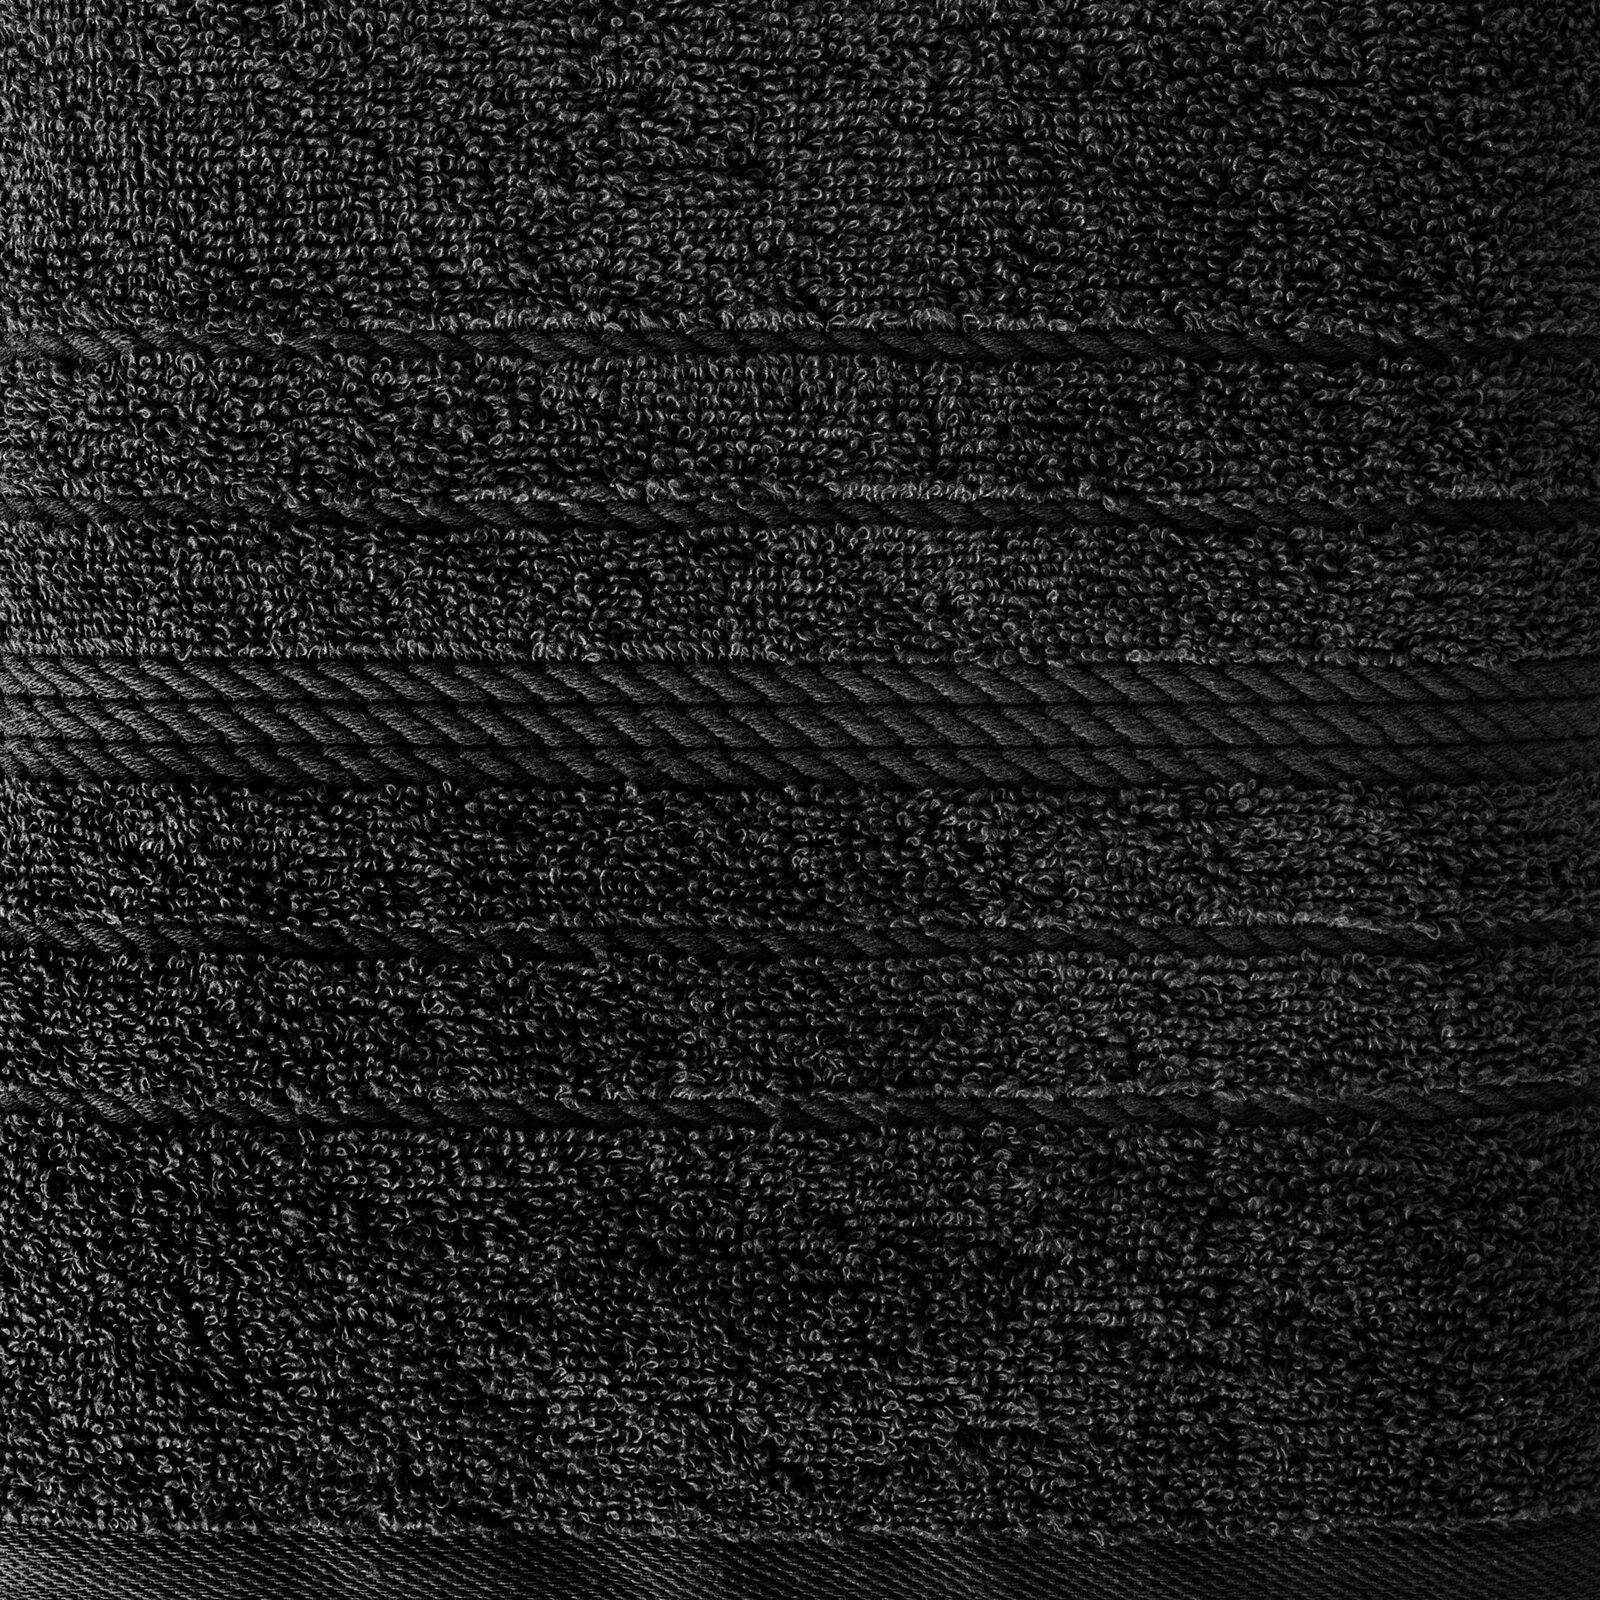 Ręcznik Elma 70x140 czarny frotte 450g/m2